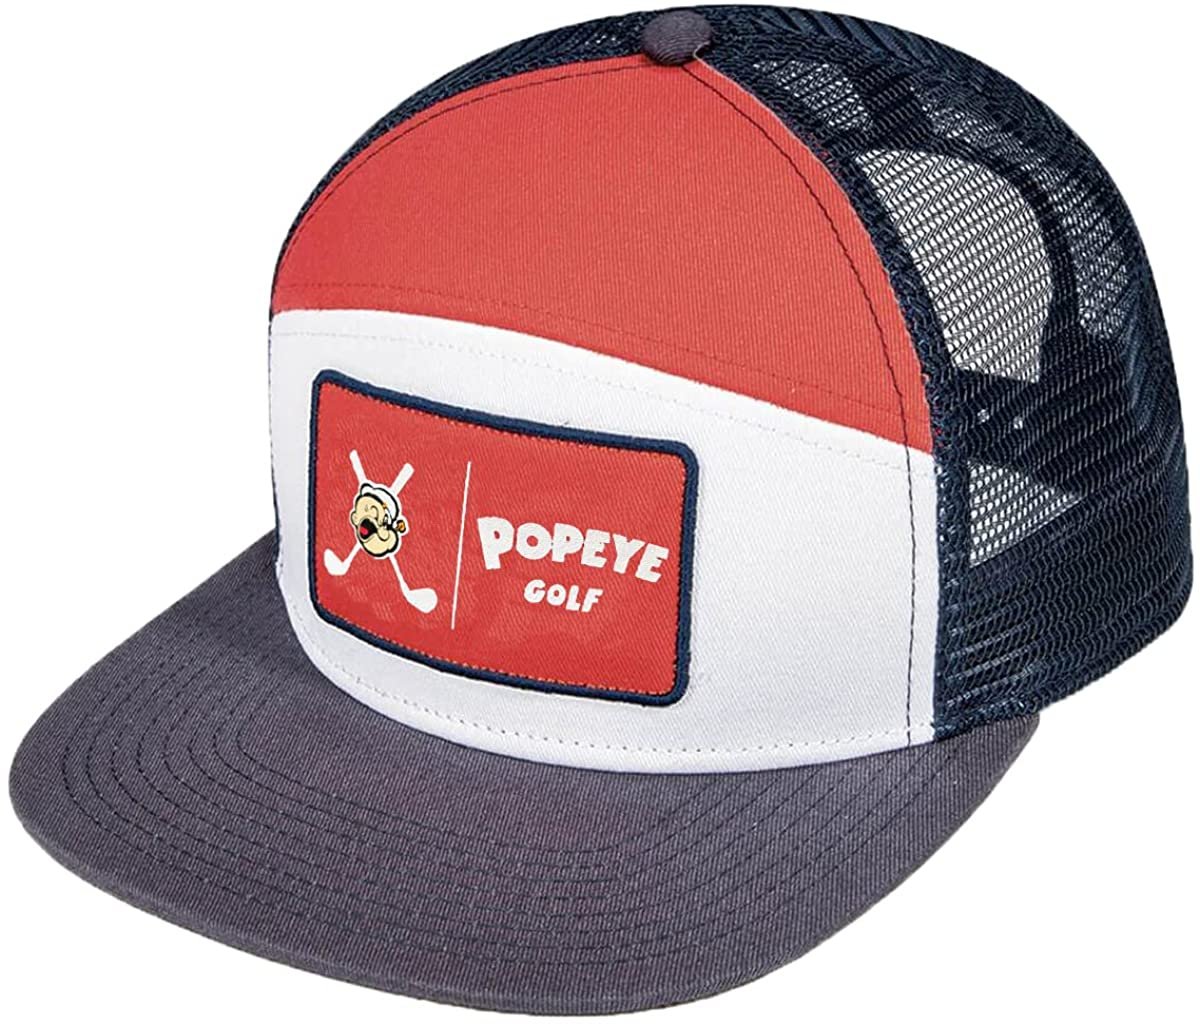 Popeye Golf Tradesman Mesh Adjustable Snapback Trucker Hat